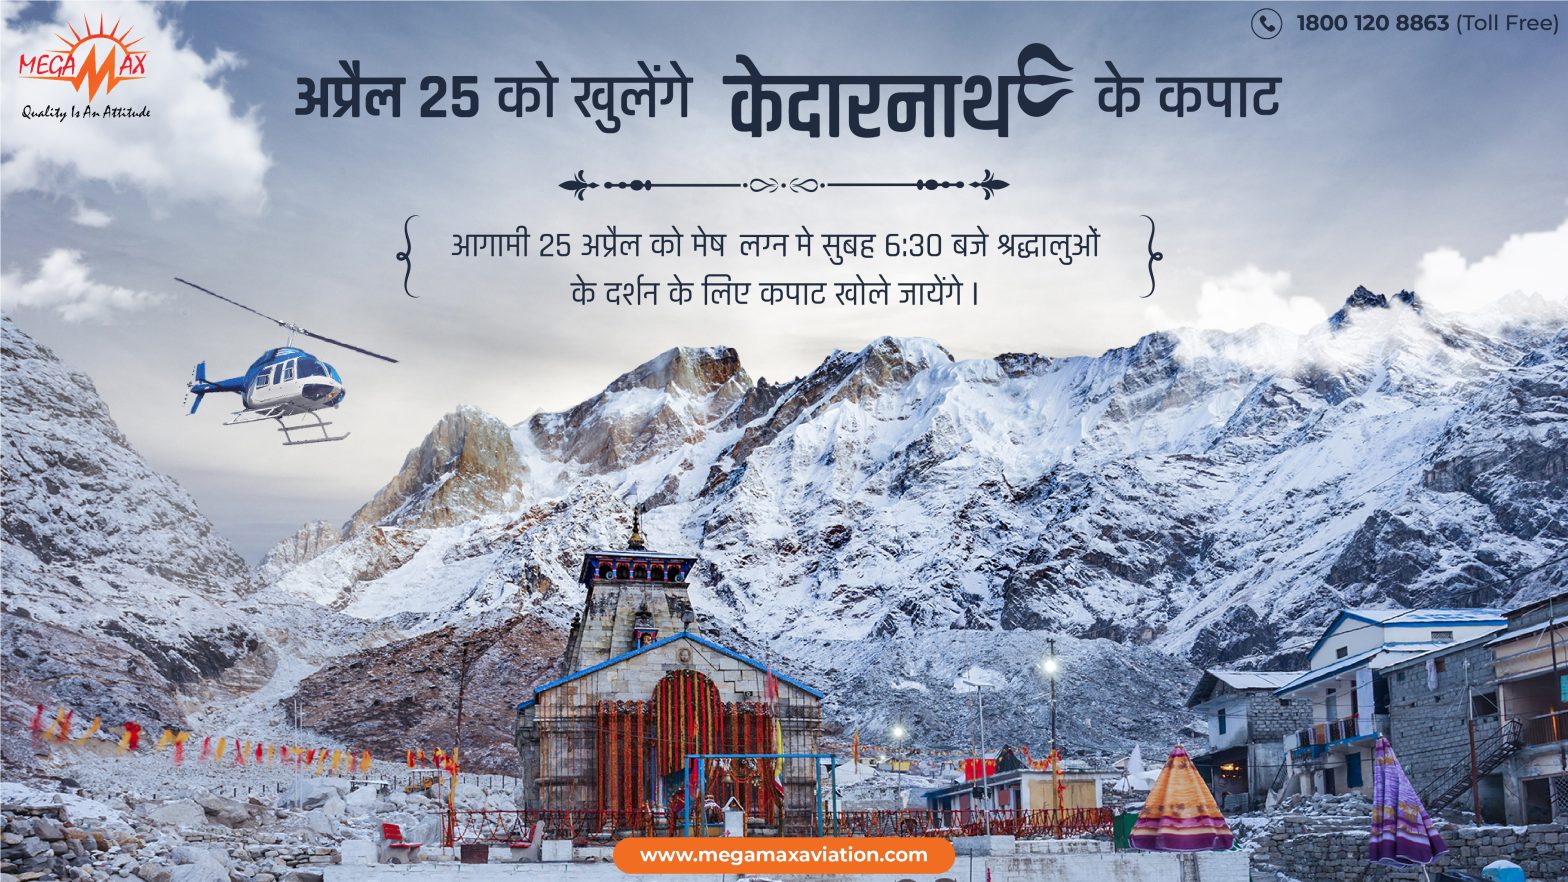 Kedarnath Kapat opening is just around the corner